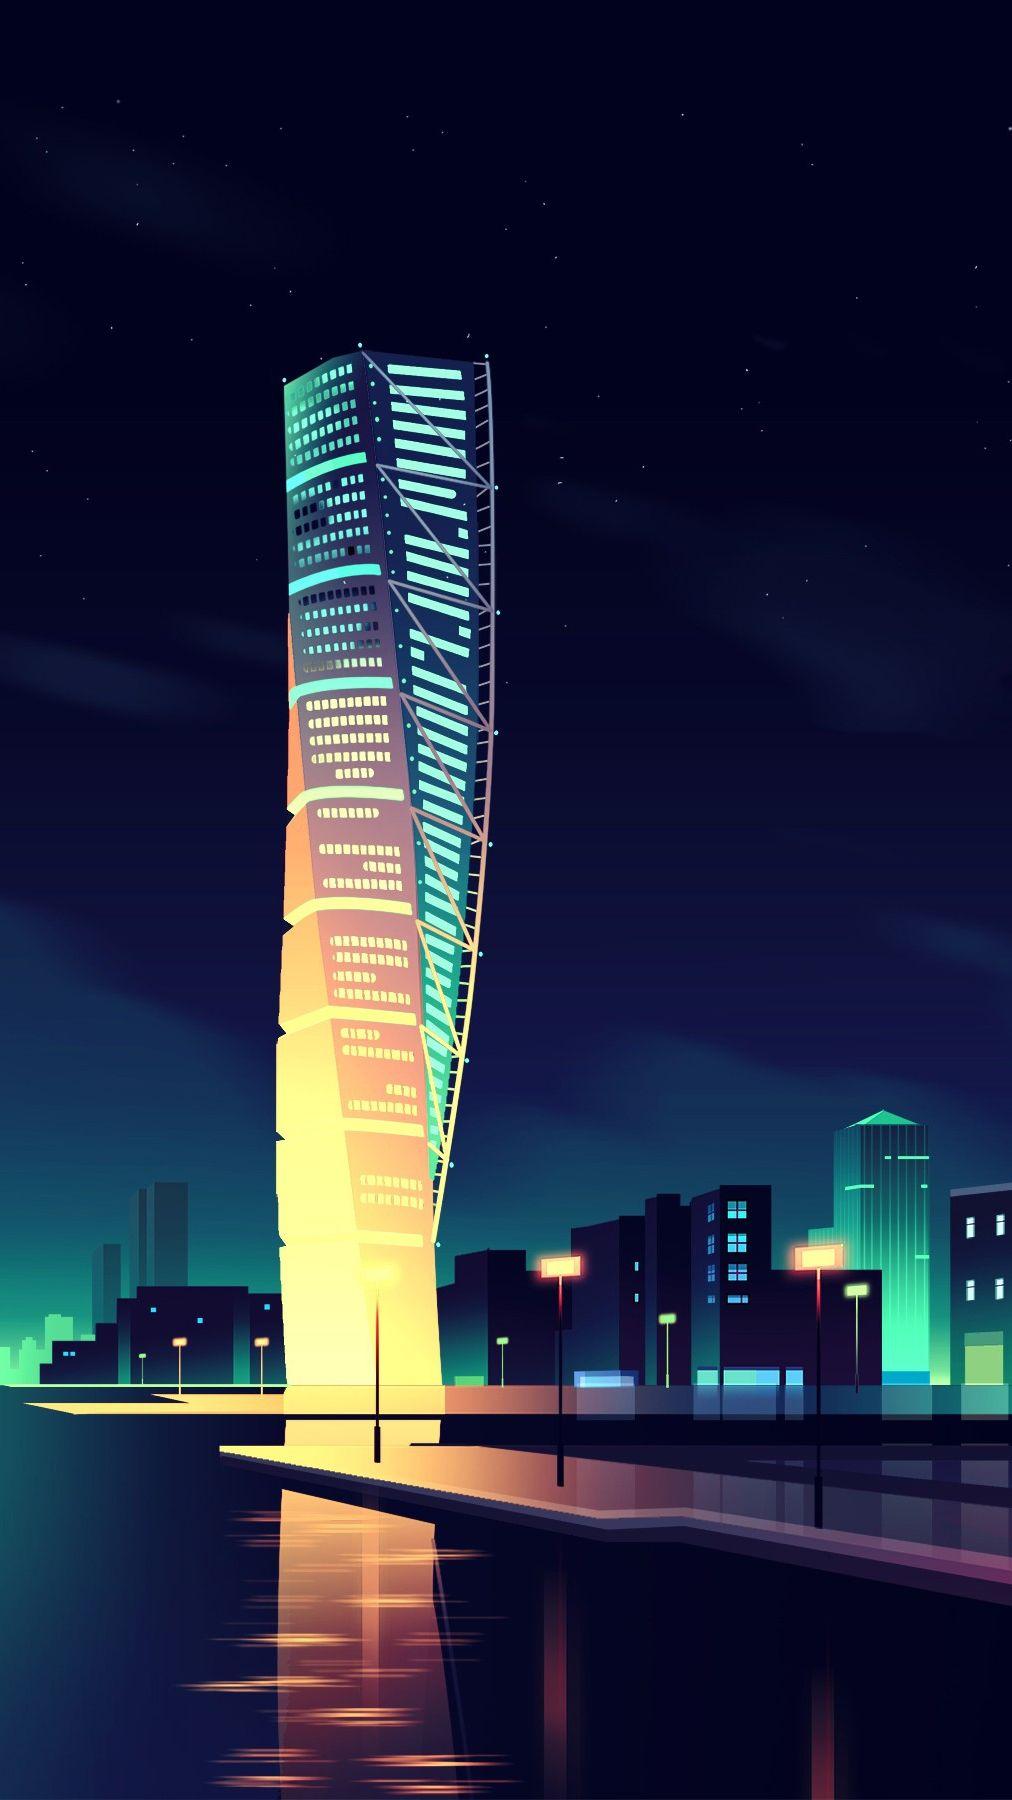 Animated Night City Wallpaper IPhone Wallpaper. City Wallpaper, City Iphone Wallpaper, Minimalist Wallpaper